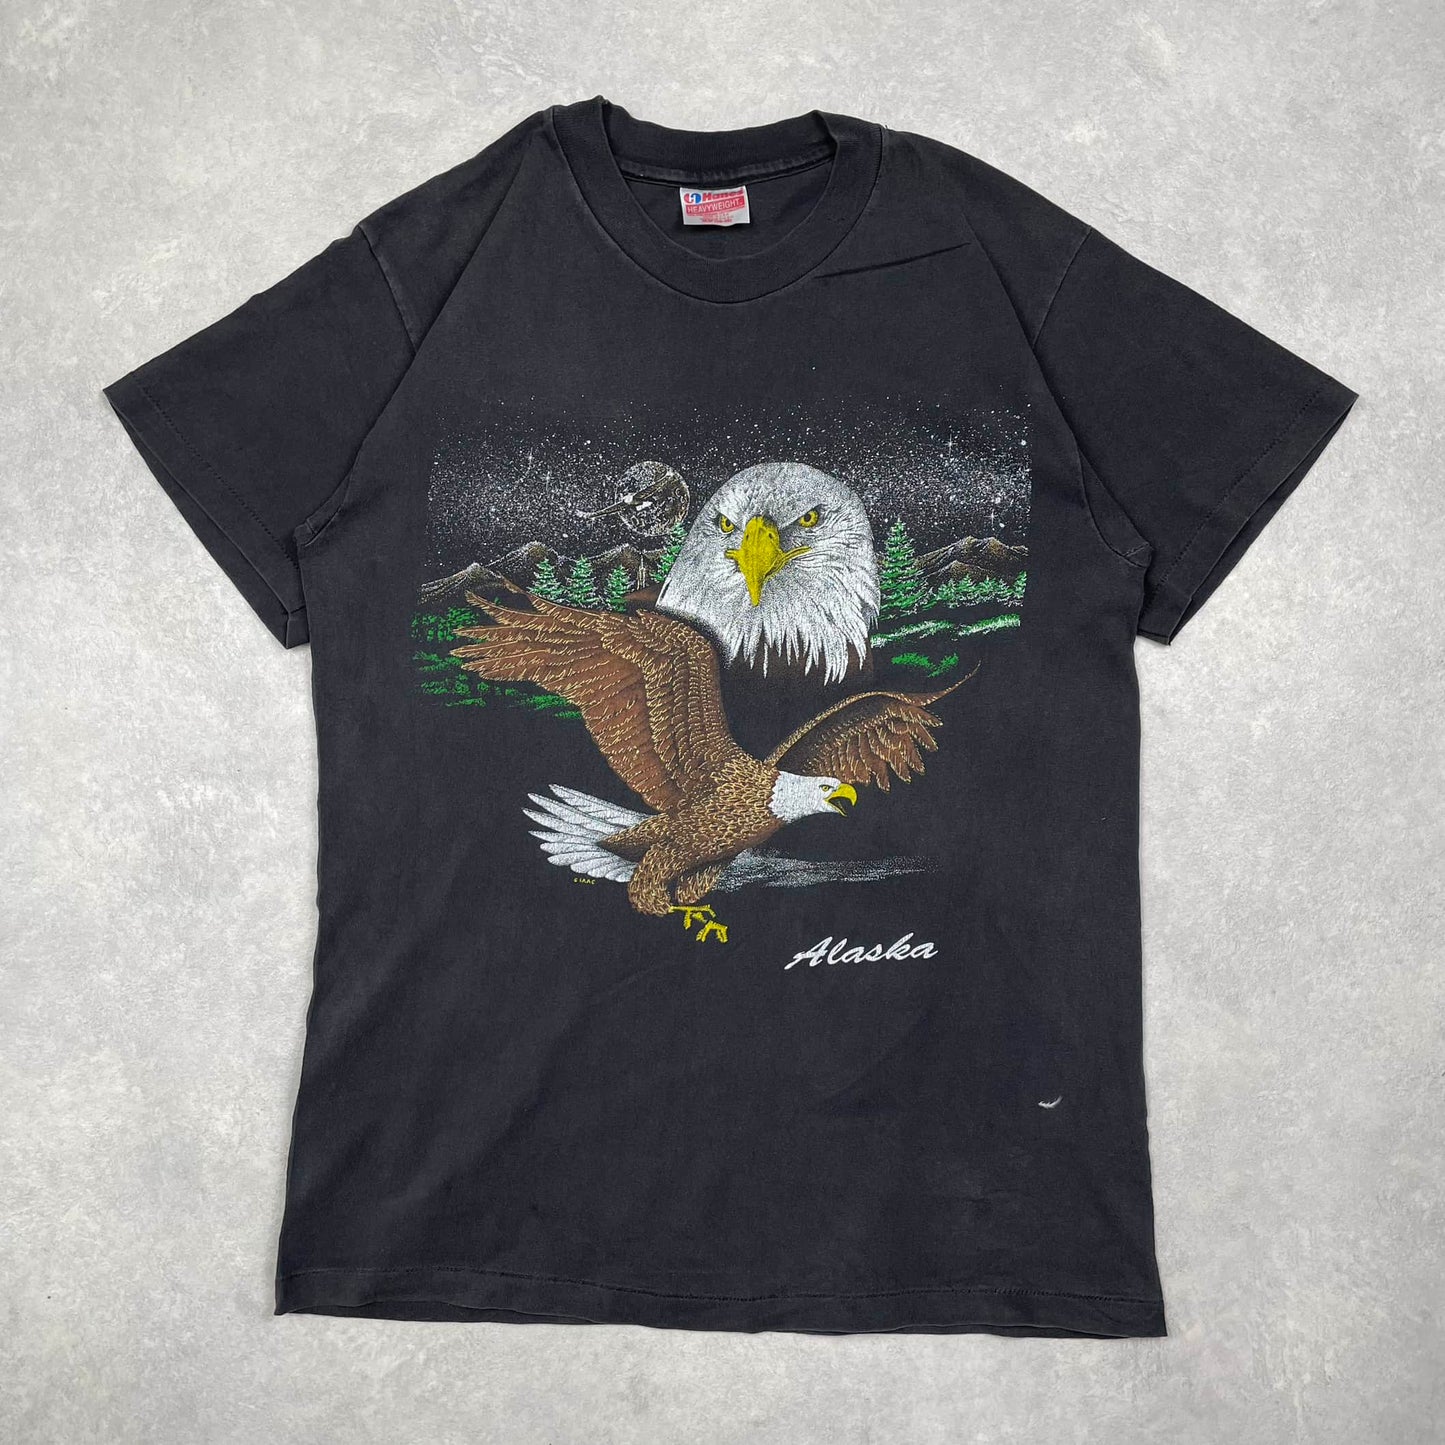 Vintage Single Stitch T-Shirt Hanes Eagle Alaska 90’s Made in USA